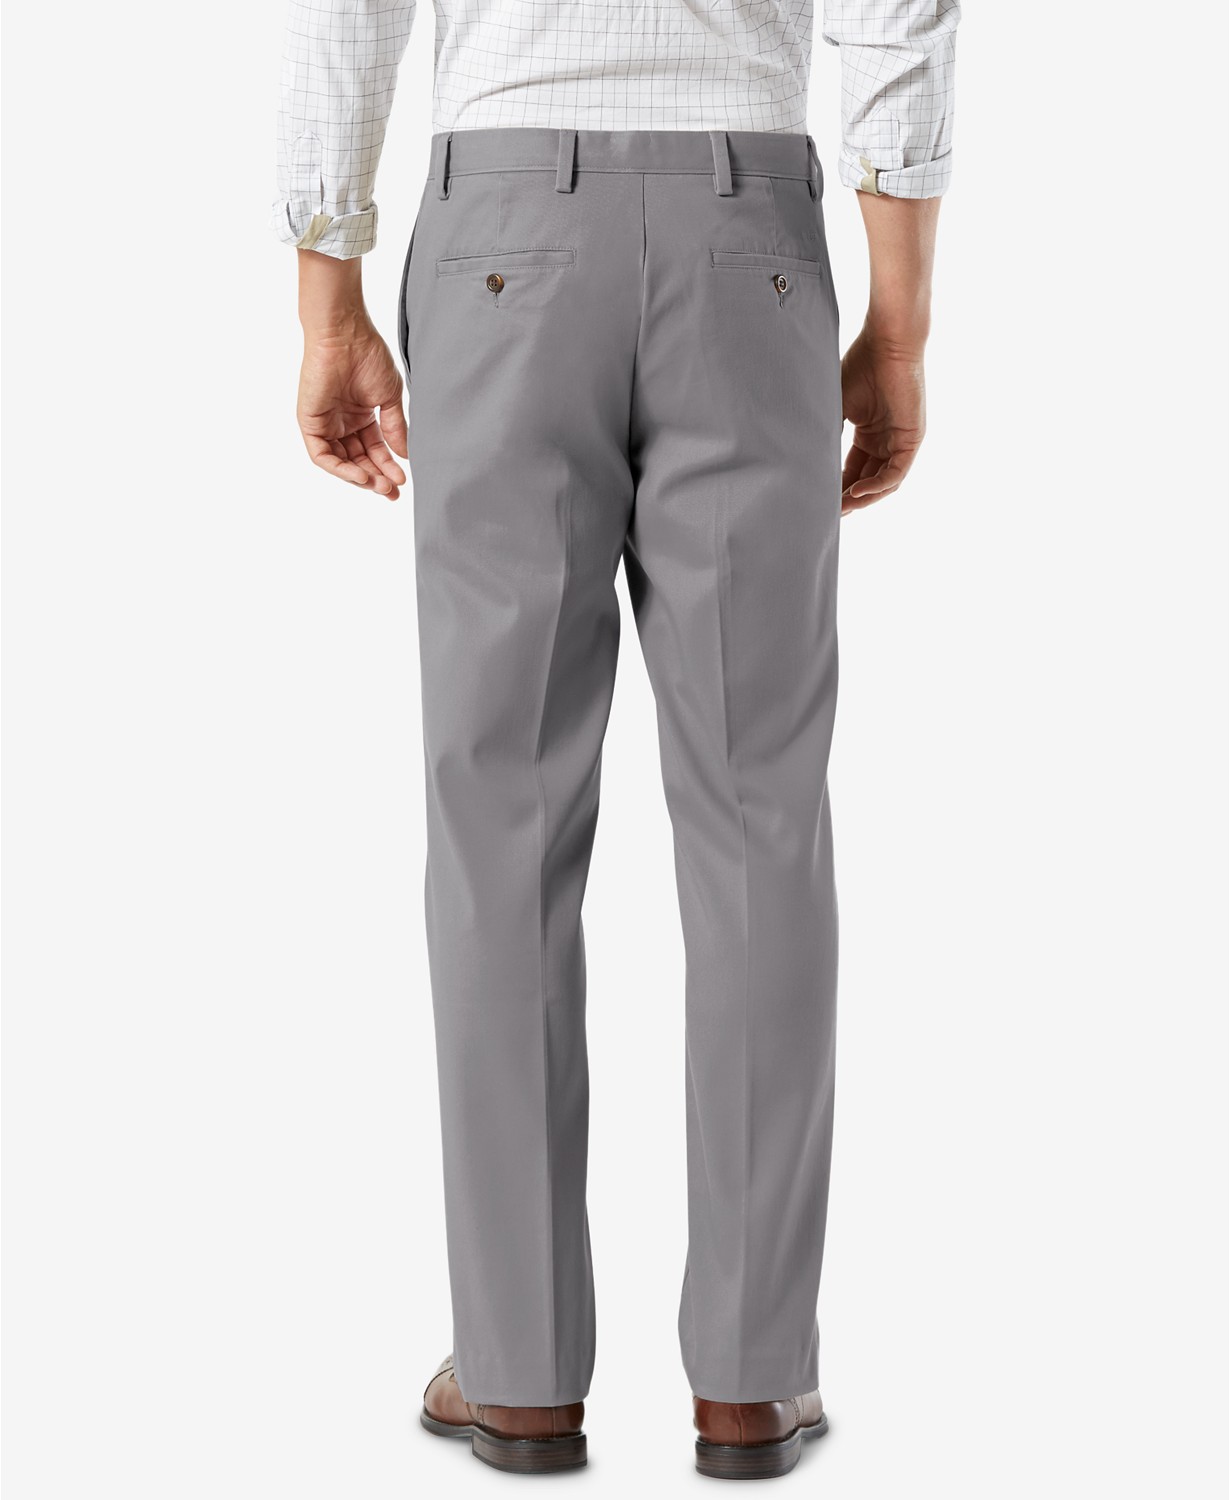 www.couturepoint.com-dockers-mens-grey-cotton-blend-easy-classic-fit-khaki-stretch-pants